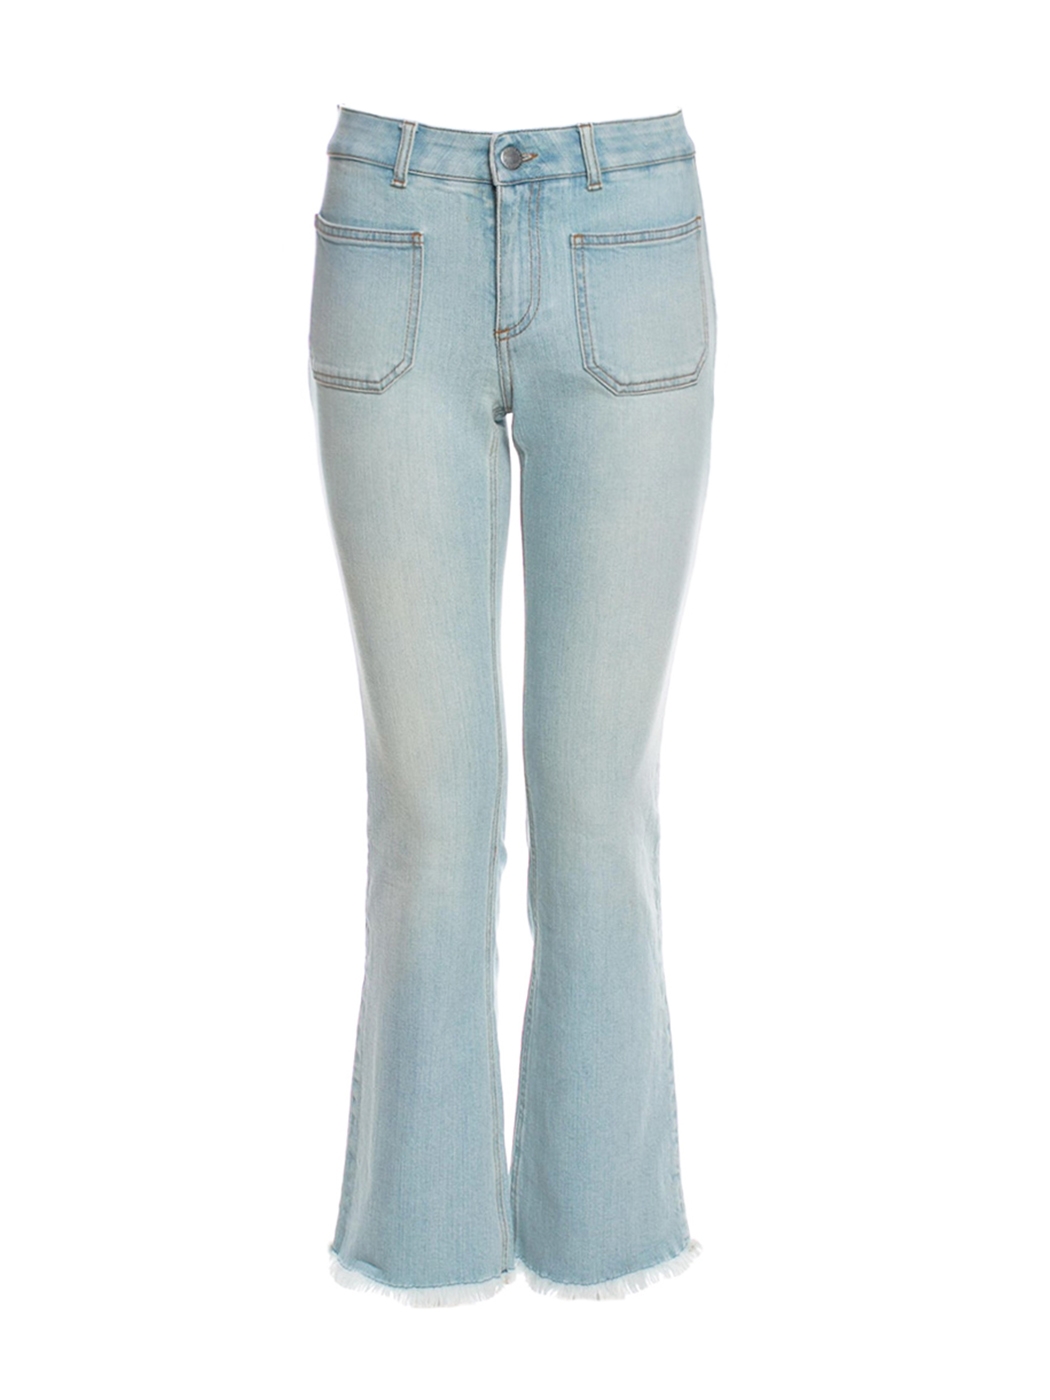 https://louiseparis.fr/92331/stella-mccartney-frayed-hem-mid-rise-flared-cropped-light-blue-front-pocket-jeans-retail-price-275-size-27.jpg